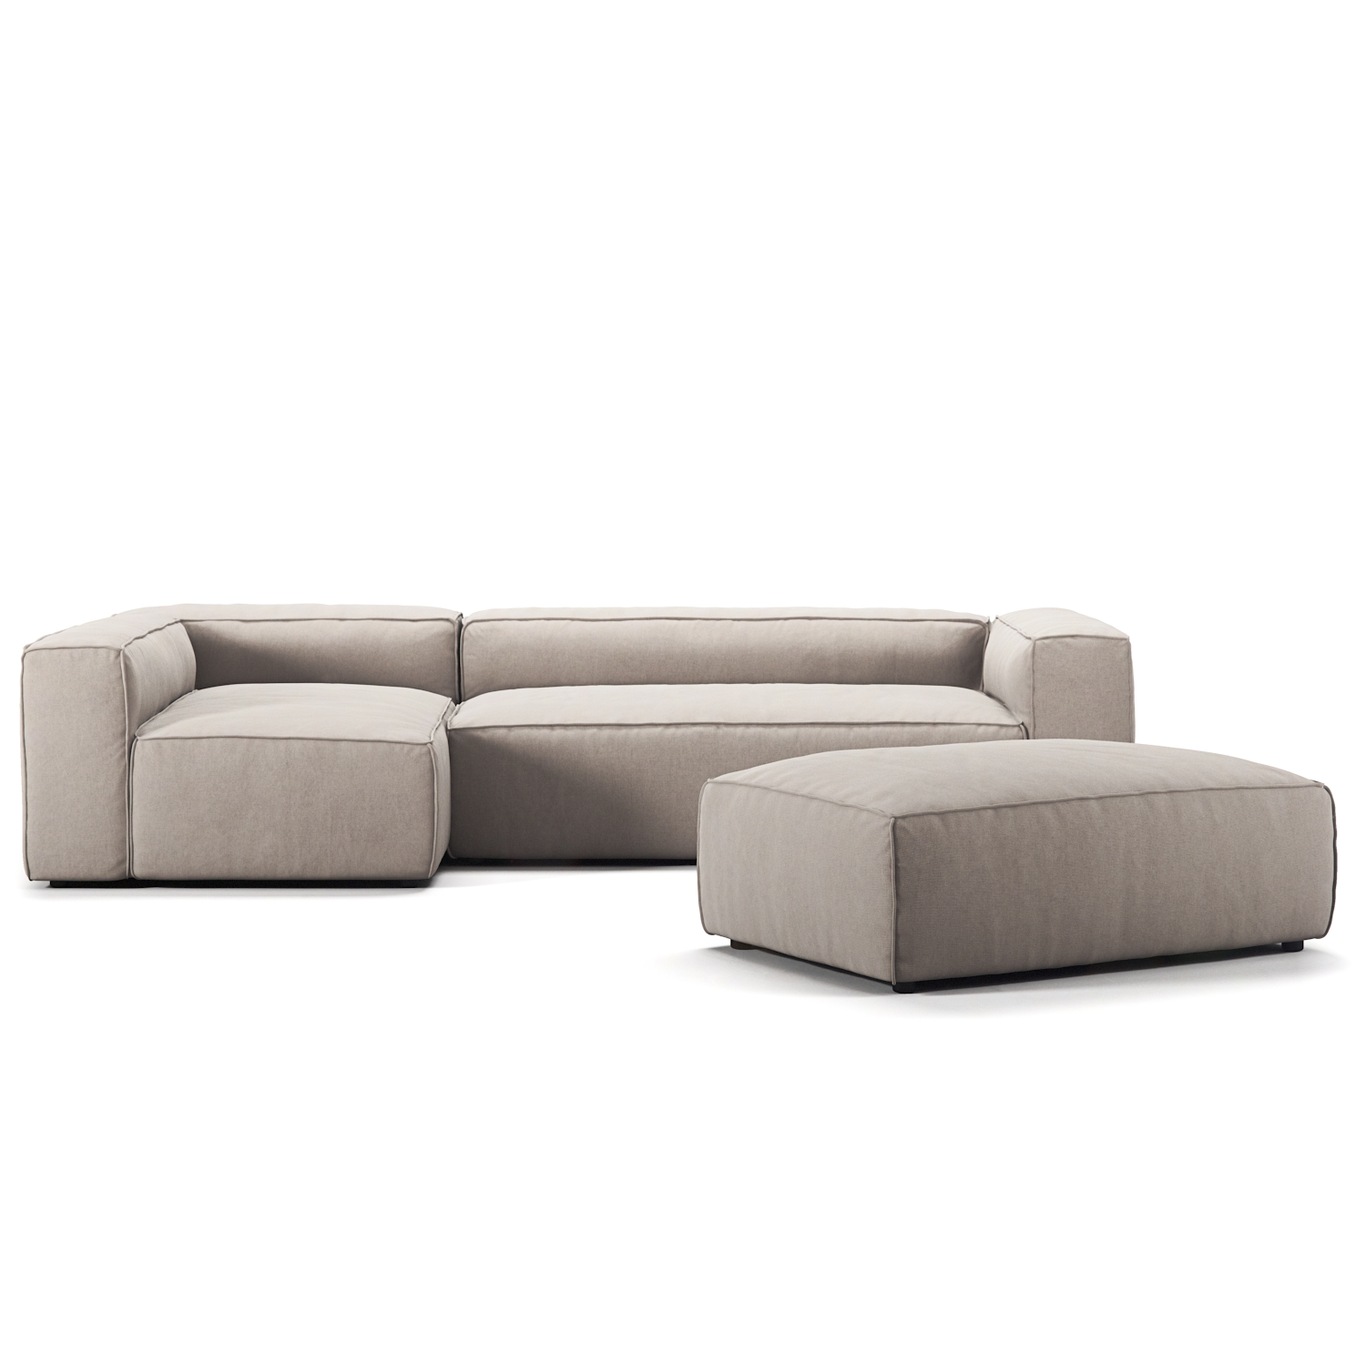 Grand 4 Seater Sofa Divan Left open end Piece With Footstool, Sandshell Beige